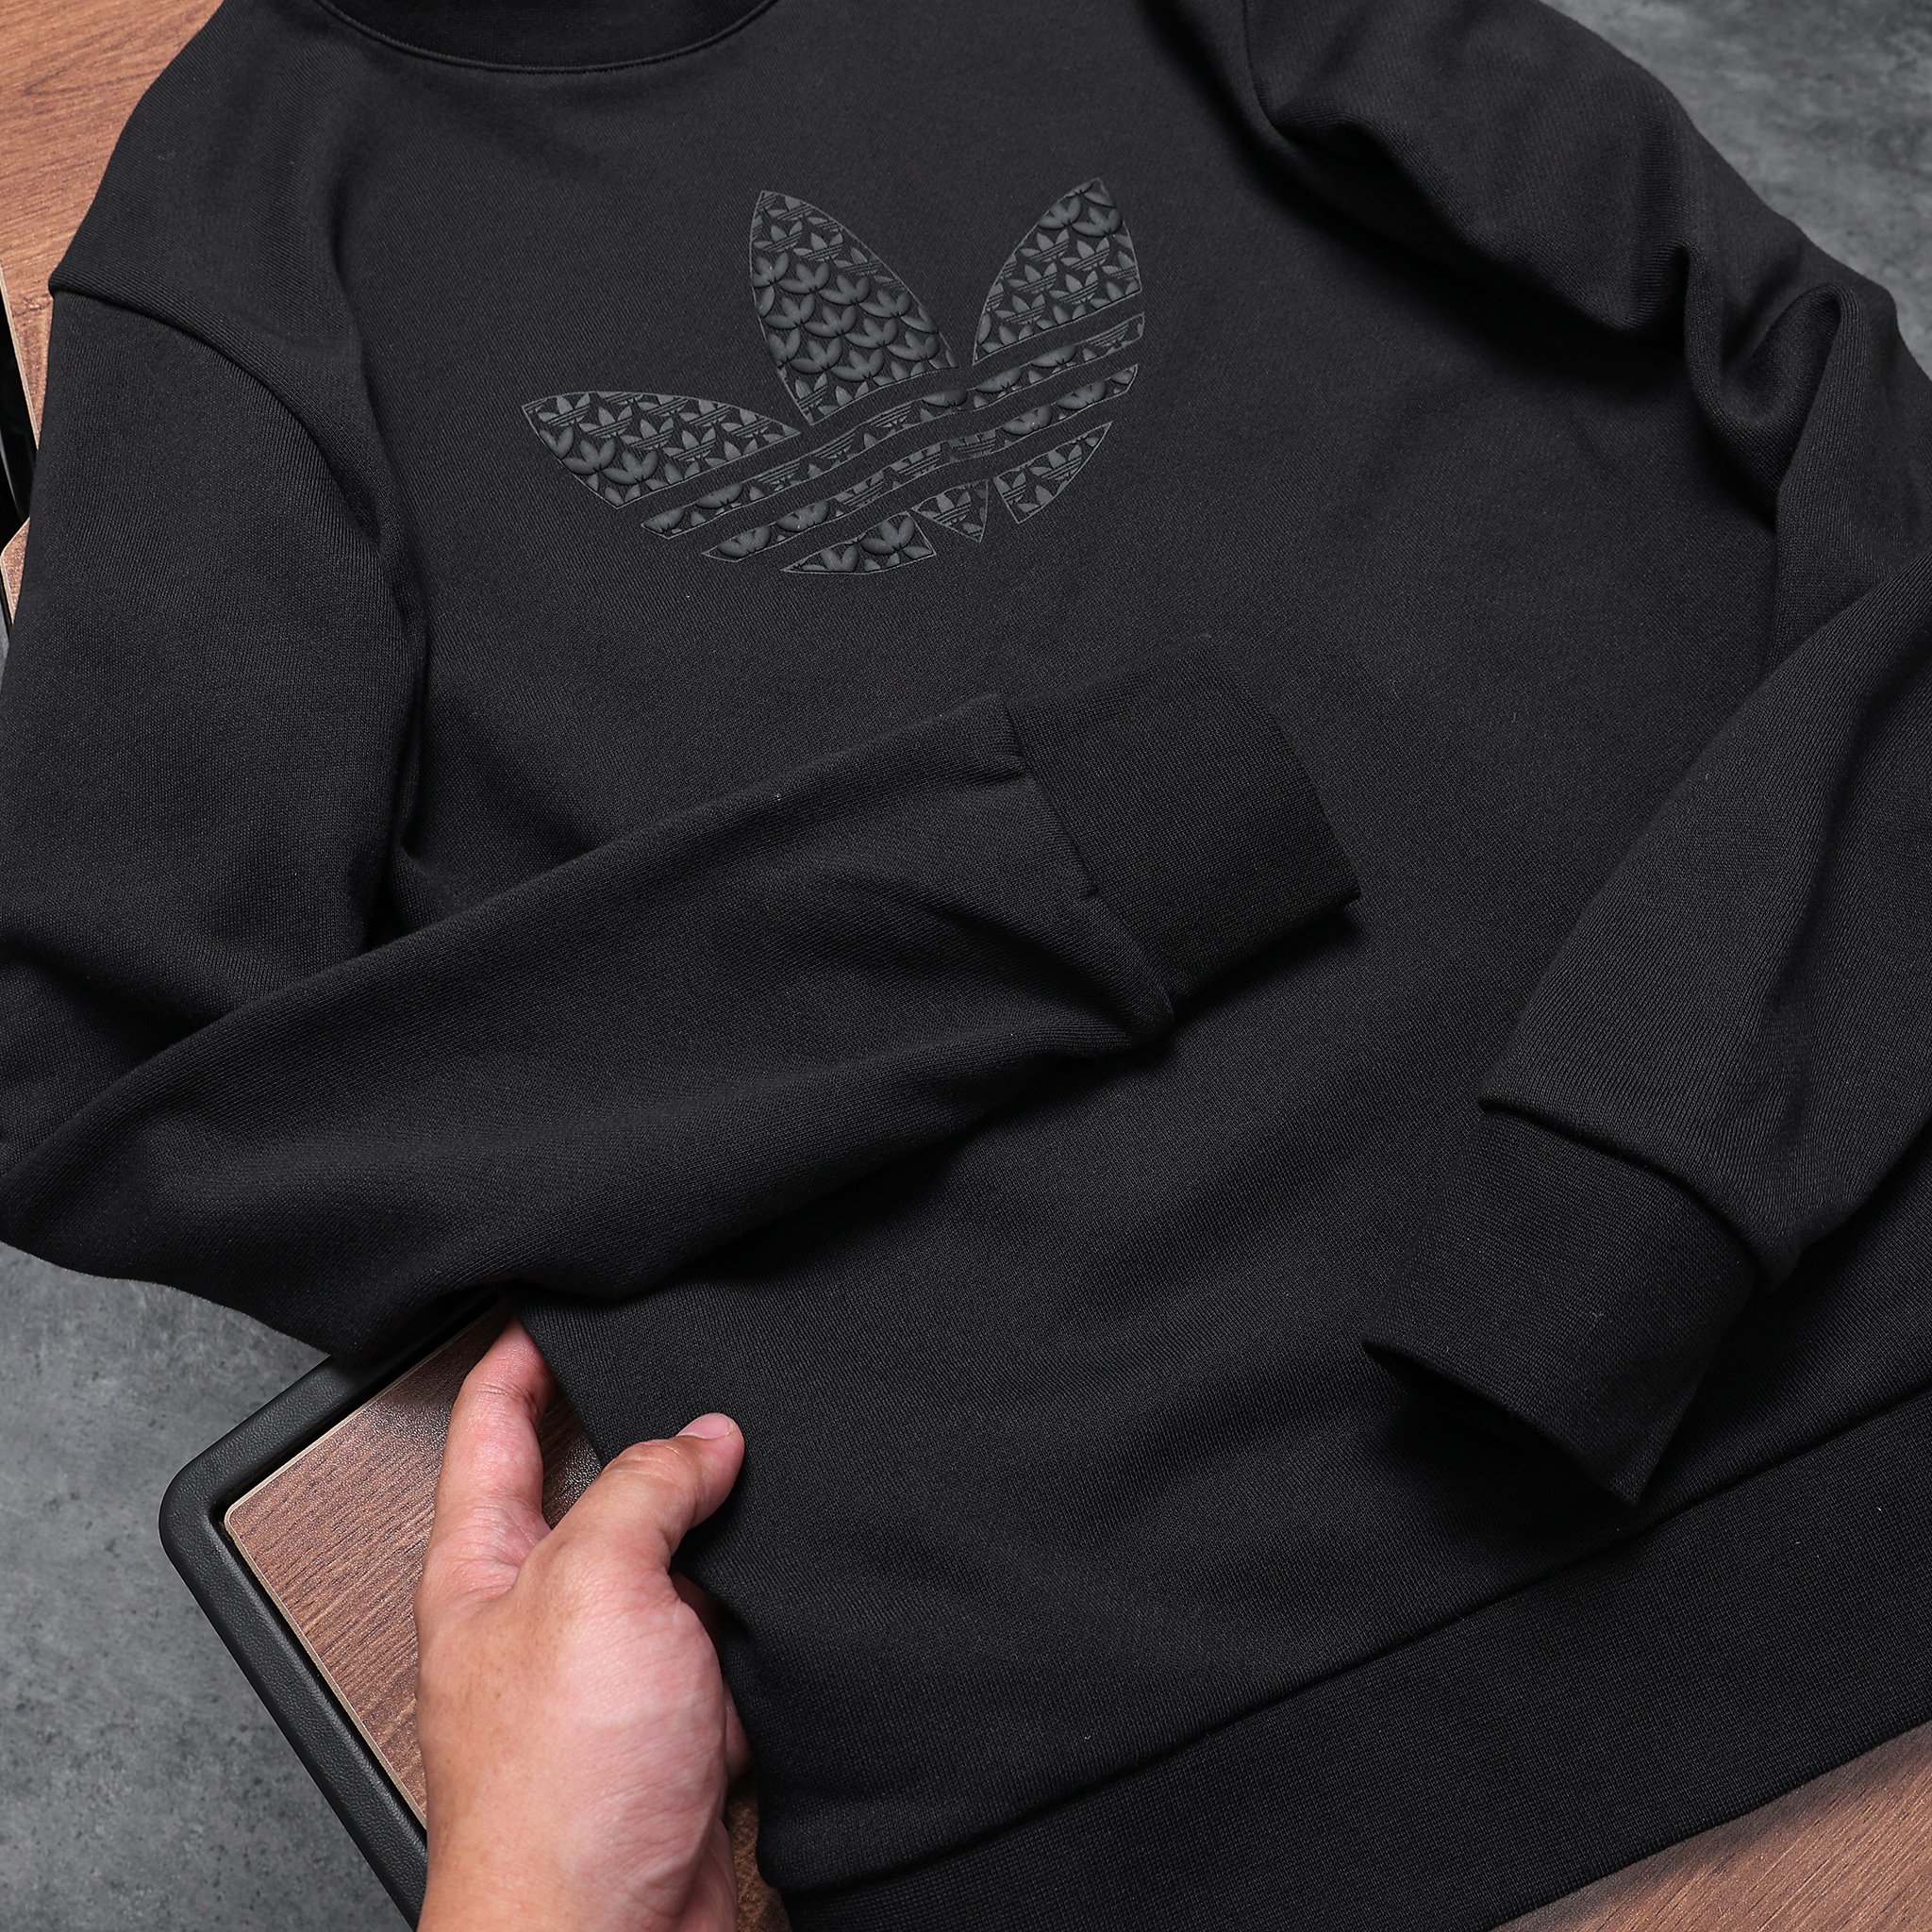 Adidas 3foil sweater ss22